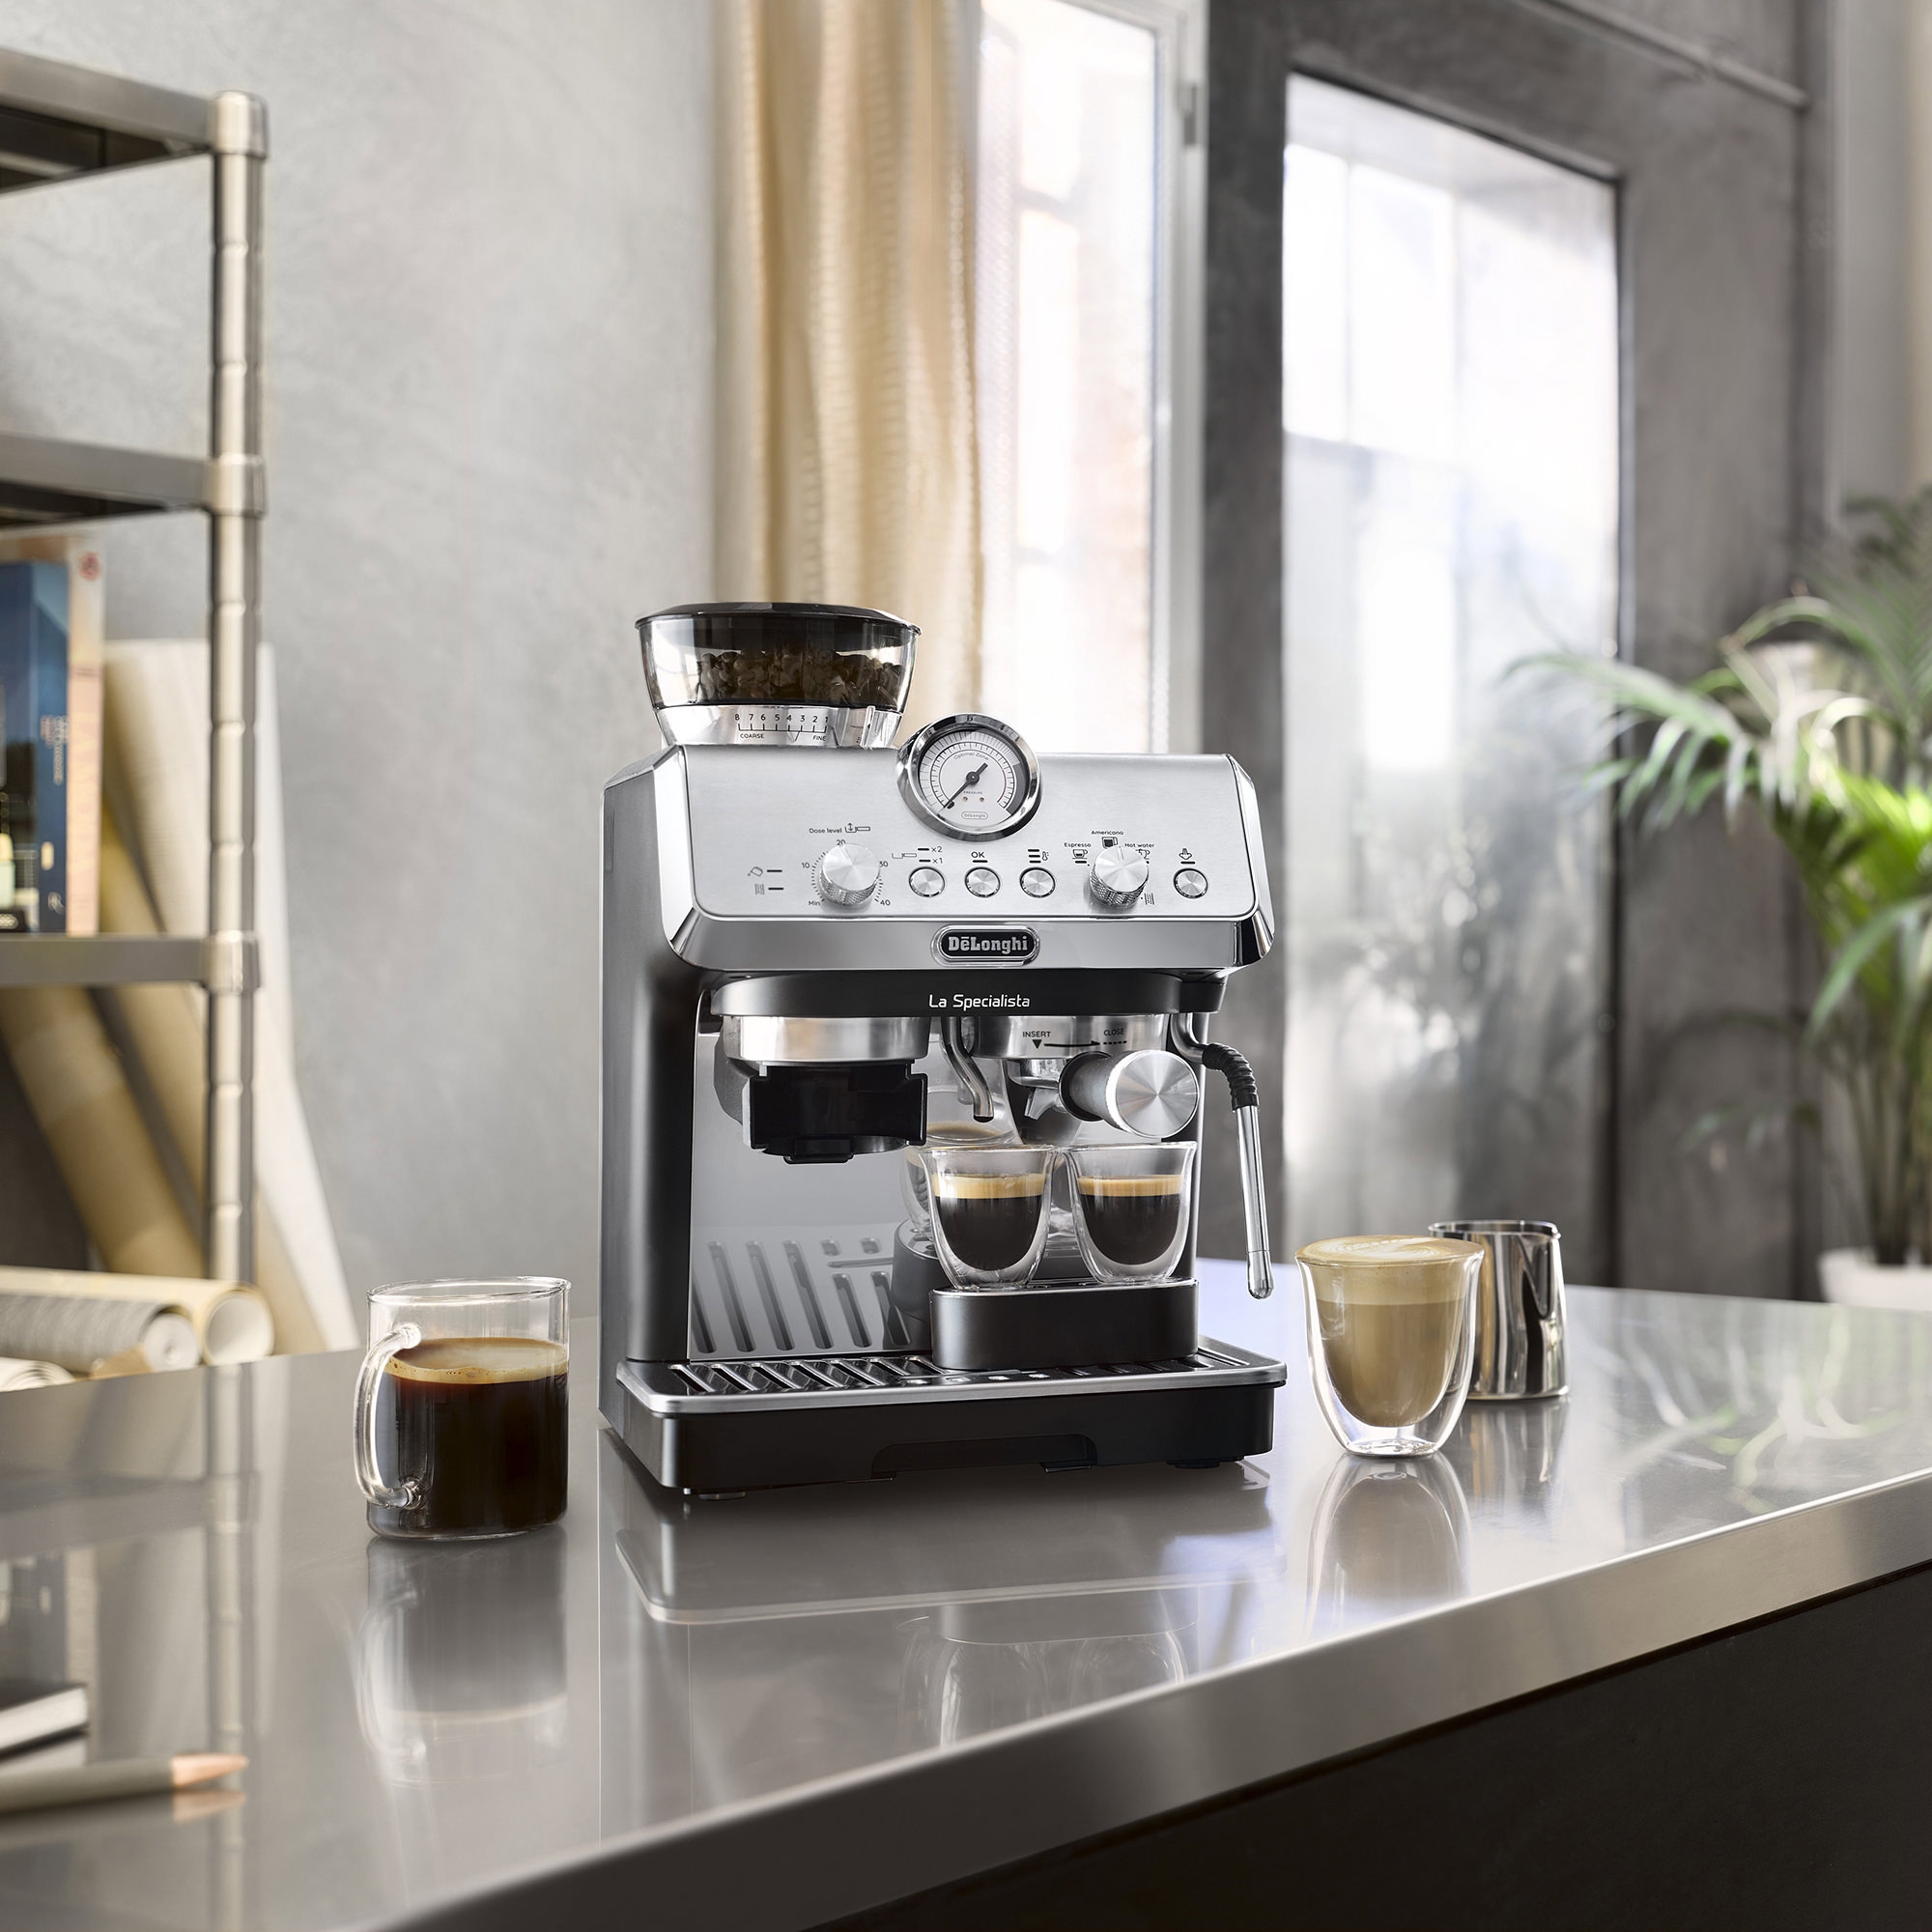 DeLonghi La Specialista Arte EC9155MB Espresso Coffee Machine Black Image 2